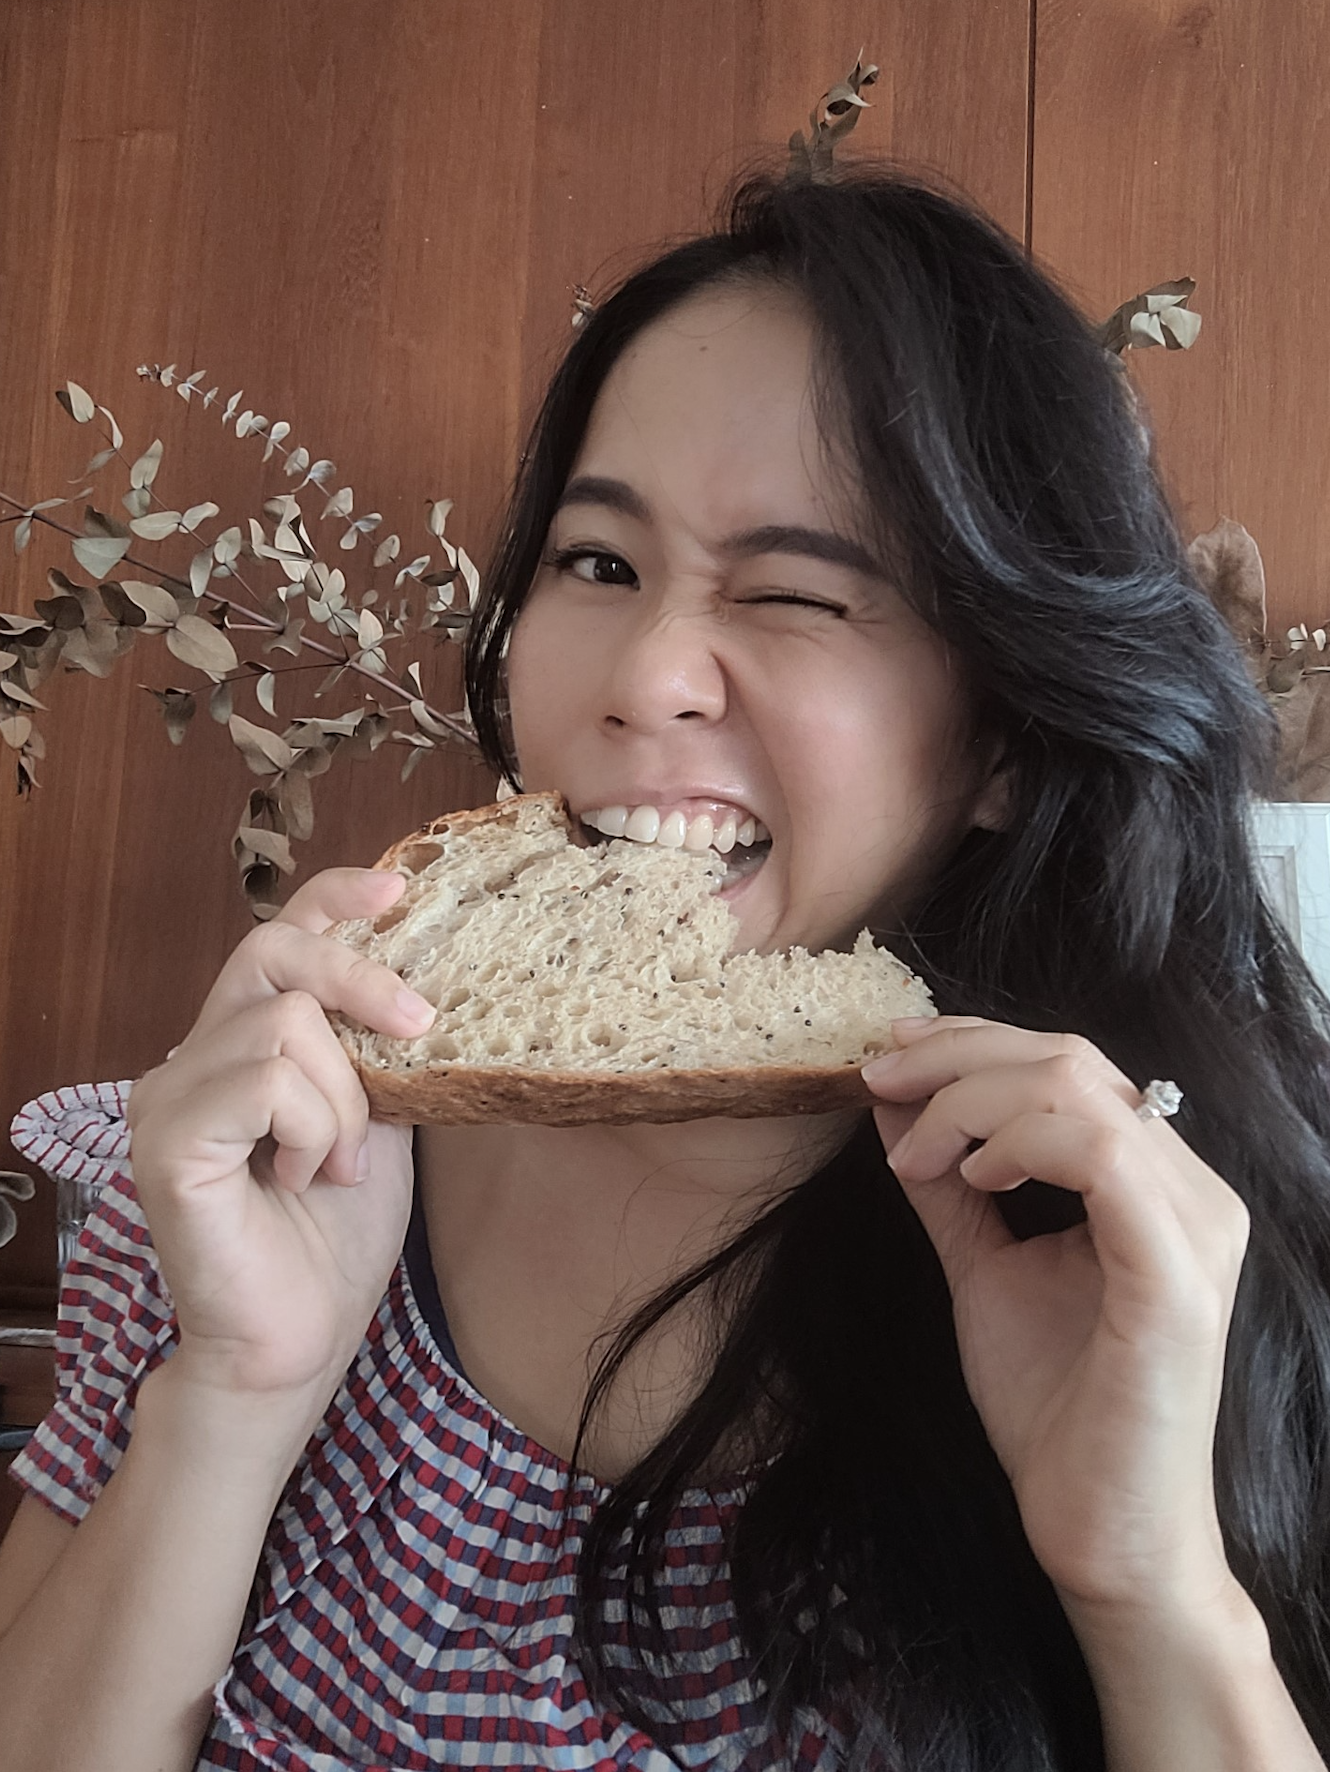 sourdough bread instagram social media influencer home baker content creator elvira @elleciously from singapore in asia 11